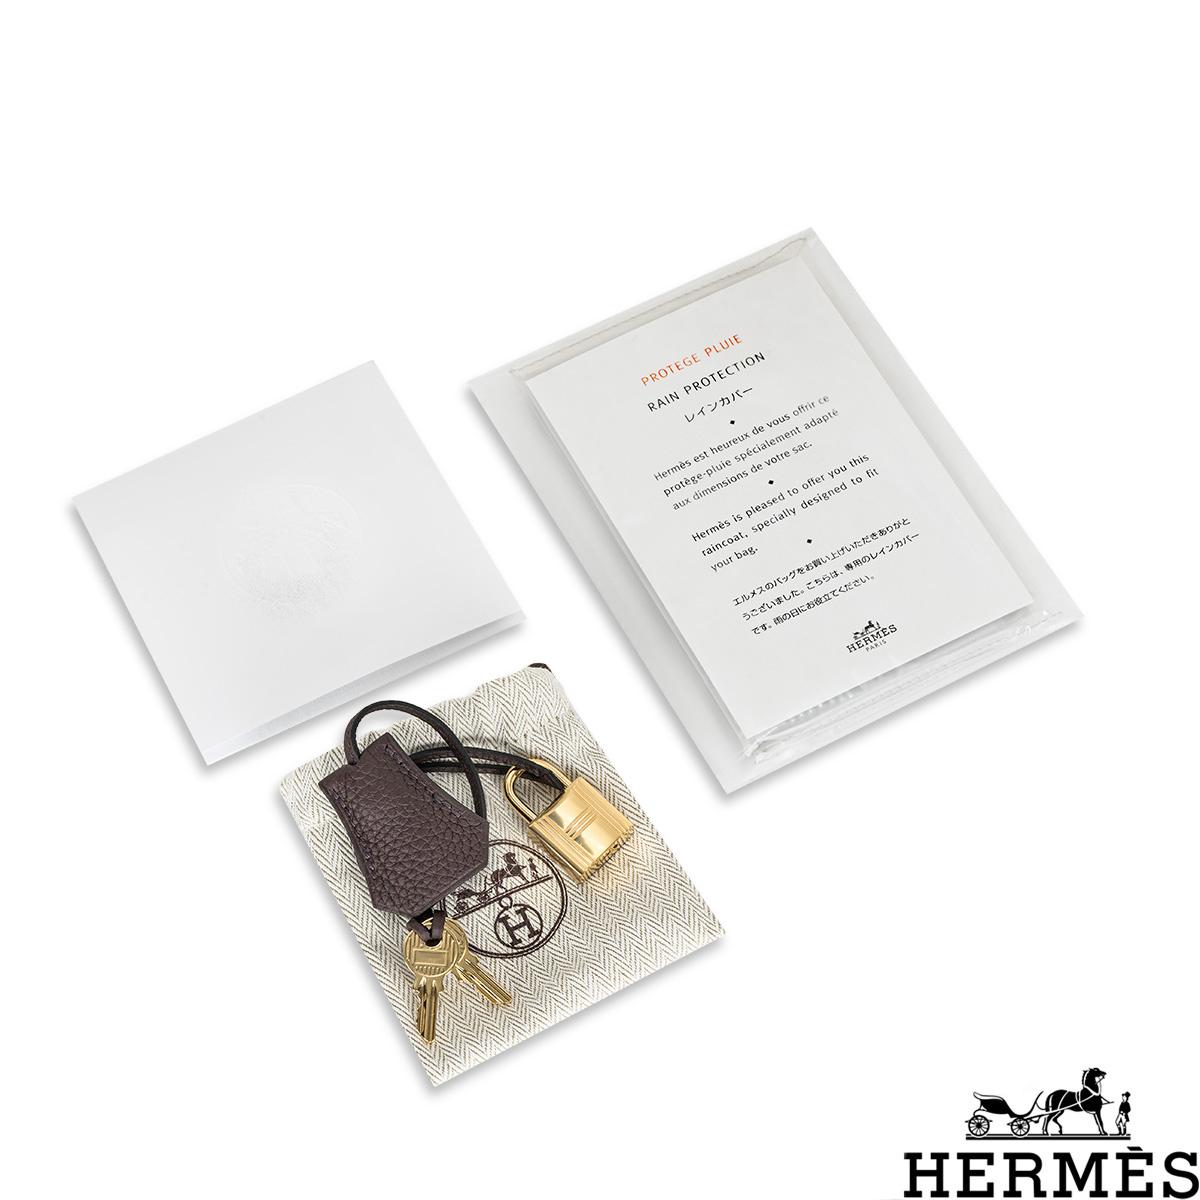 Hermès Birkin 30cm Rogue Sellier Togo GHW 4